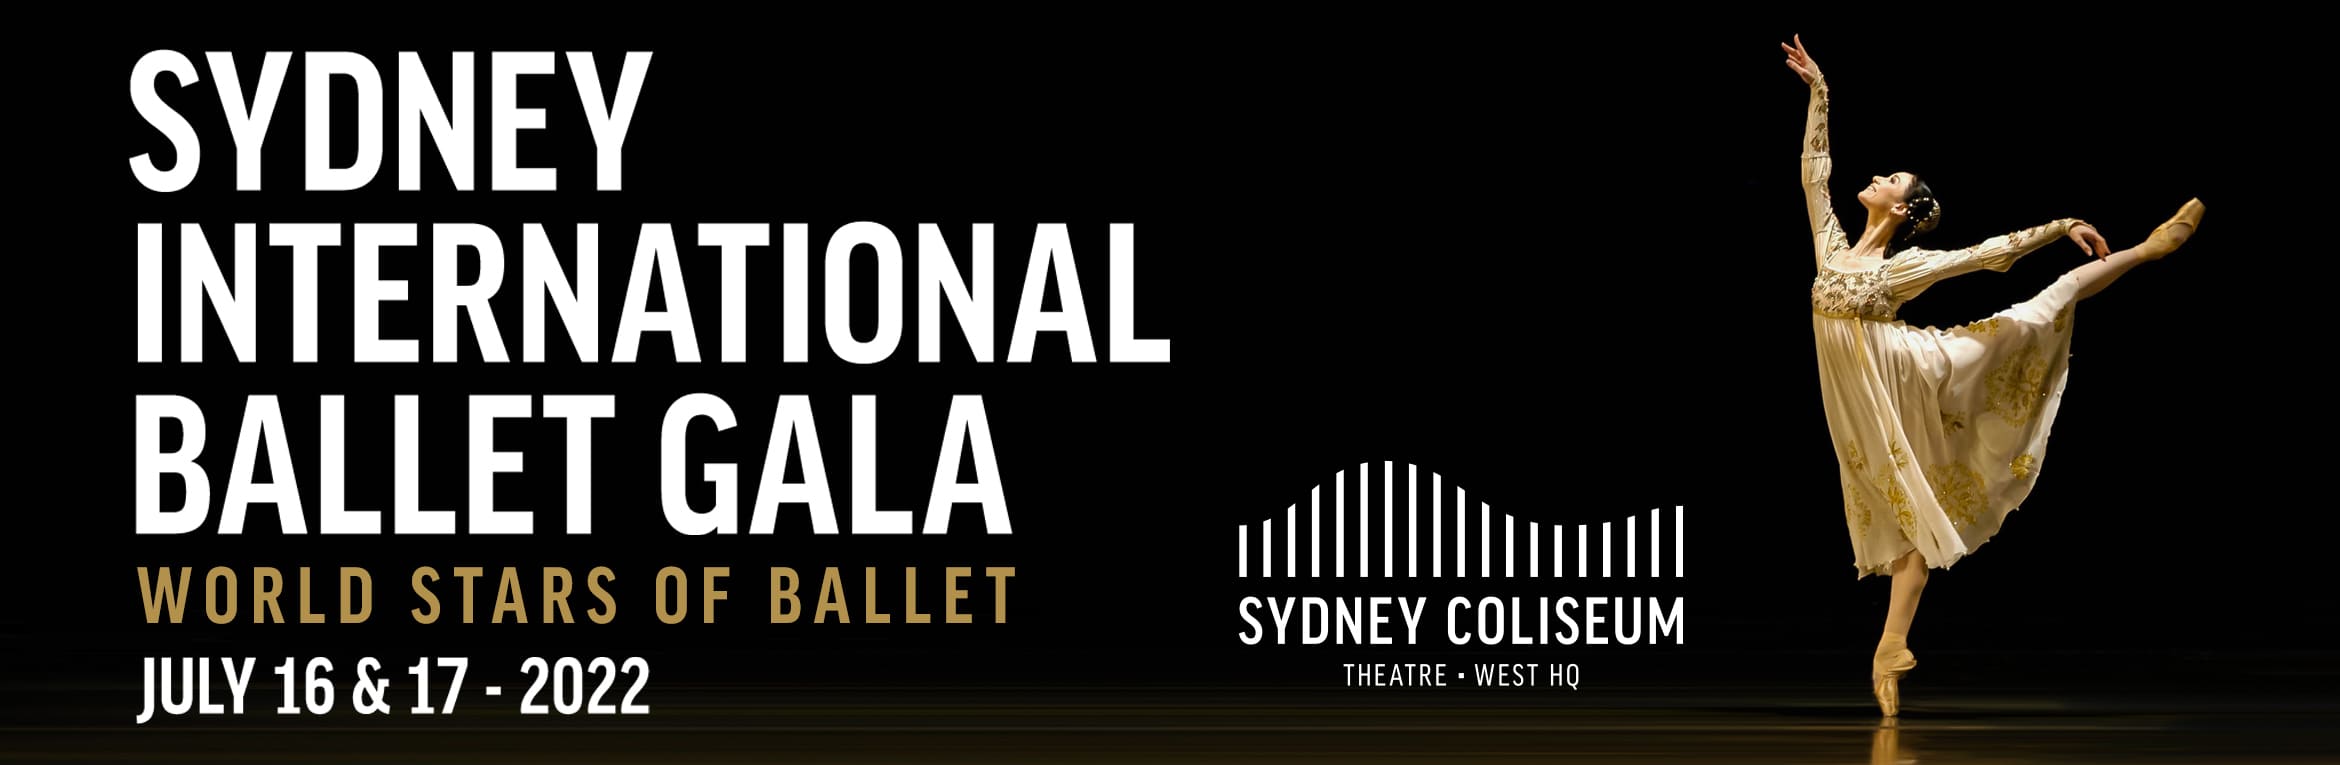 Sydney International Ballet Gala